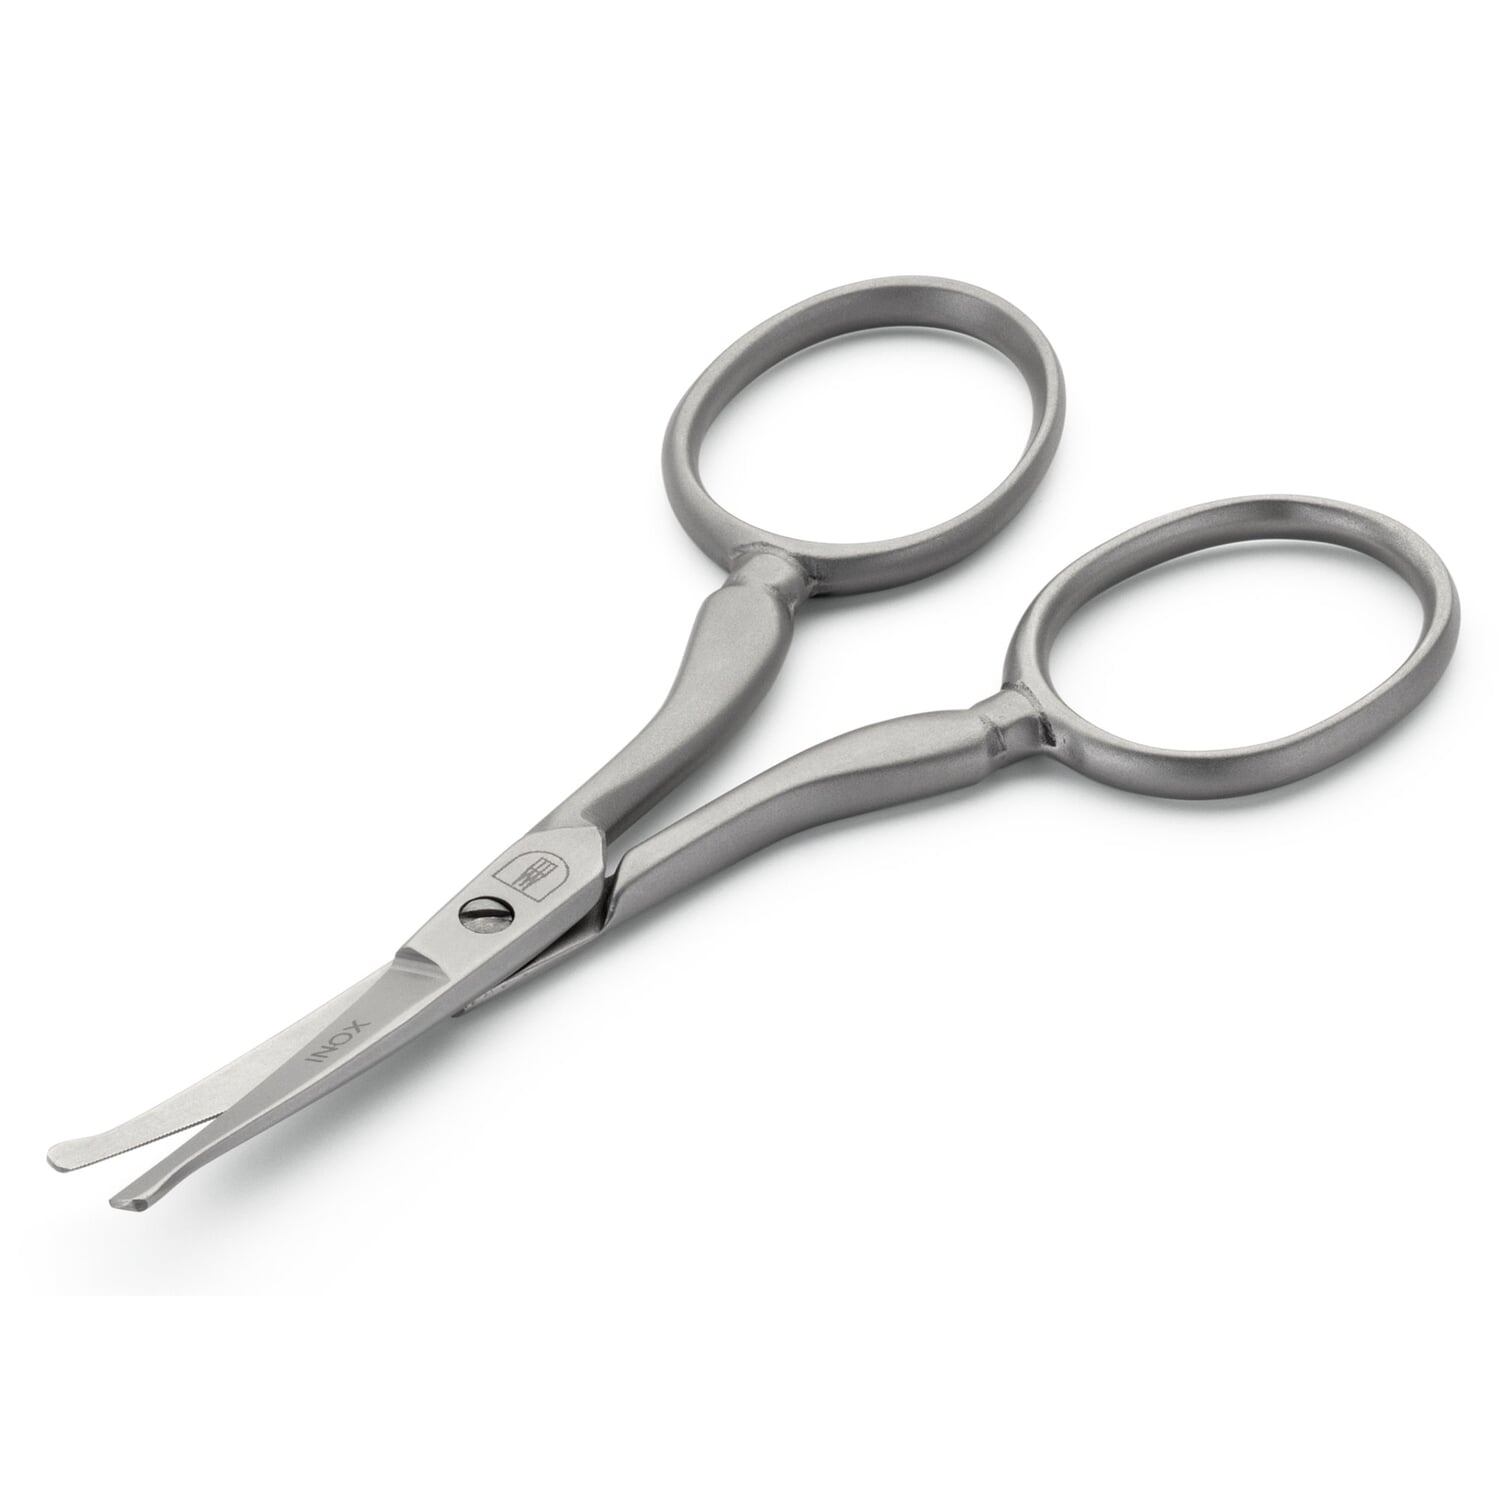 Rule beard scissors, hair cut scissors, thinning scissors, Dovo, sale